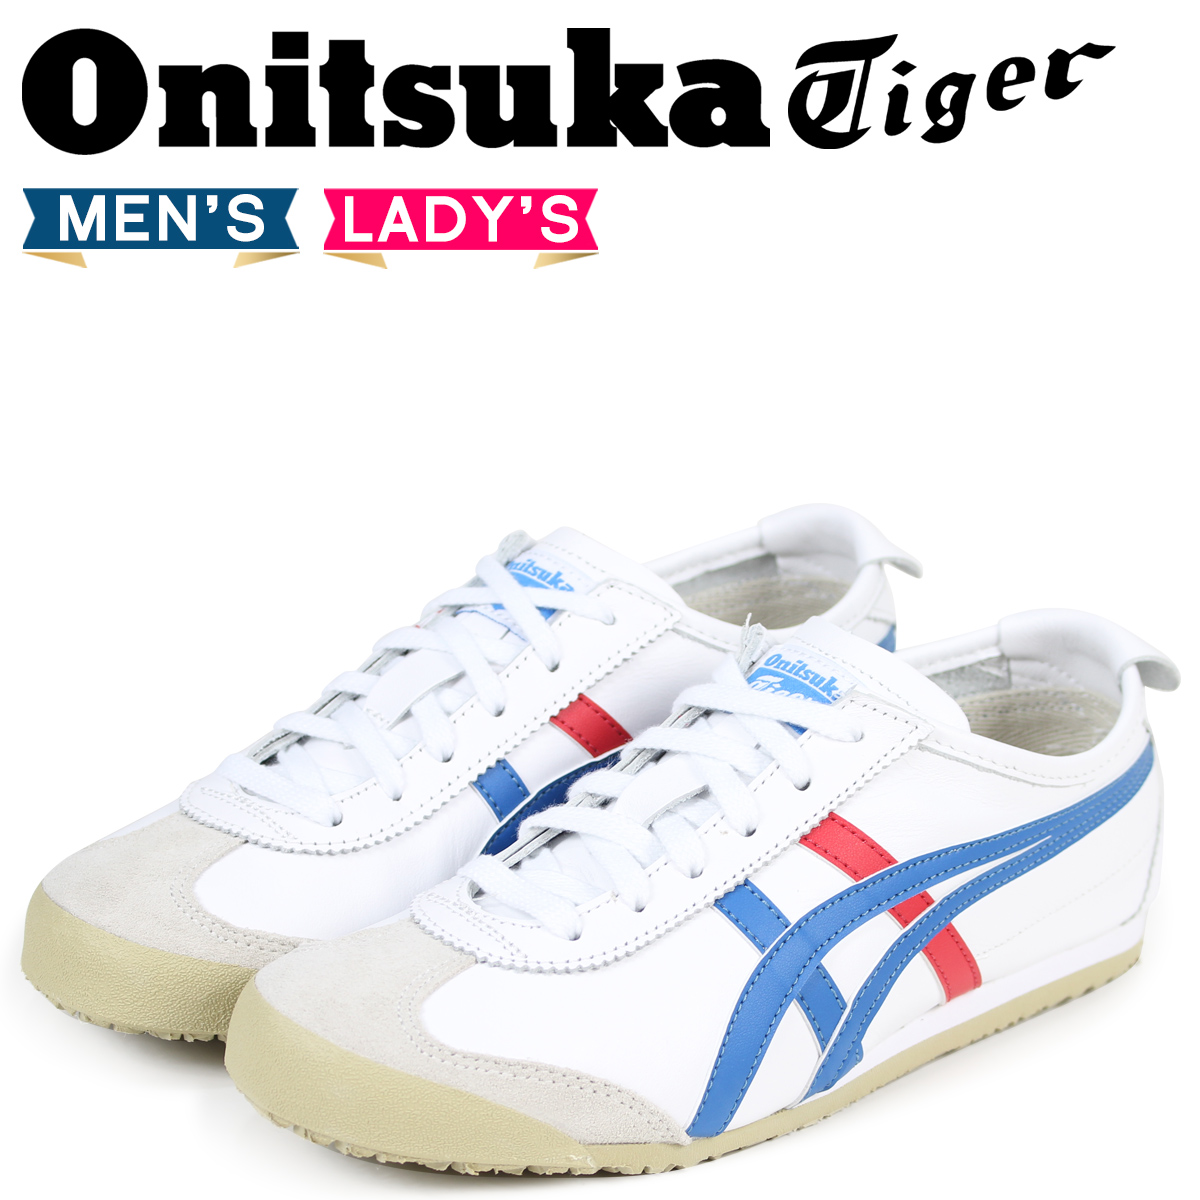 onitsuka tiger by asics